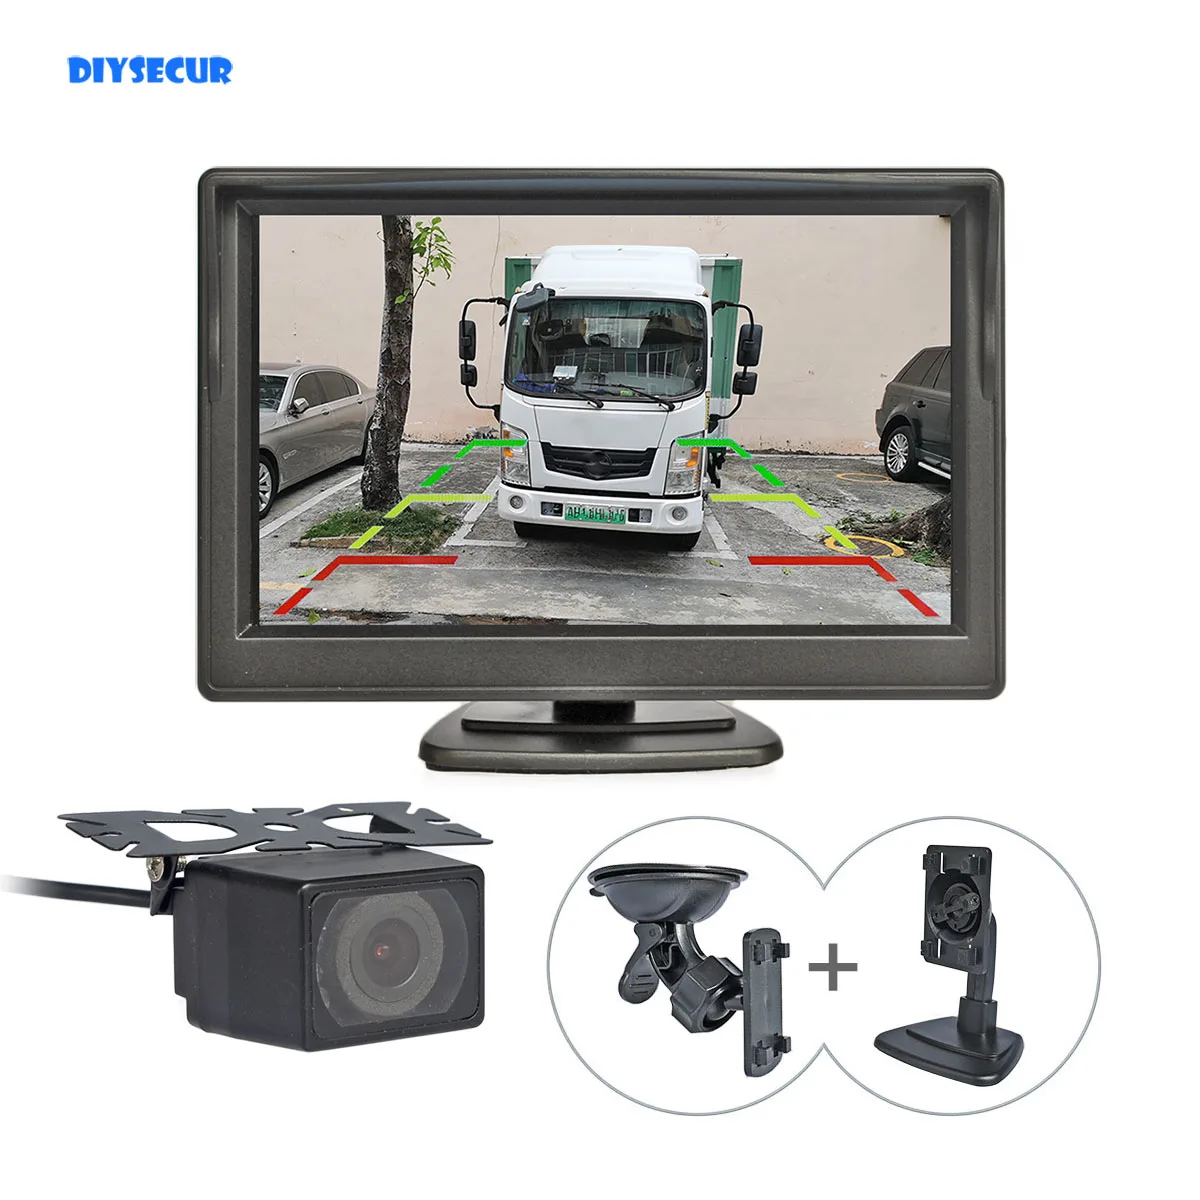 

DIYSECUR 5inch TFT LCD Display Rear View Car Monitor IR Night Vision Backup HD Car Camera 6 Meters Video Cable